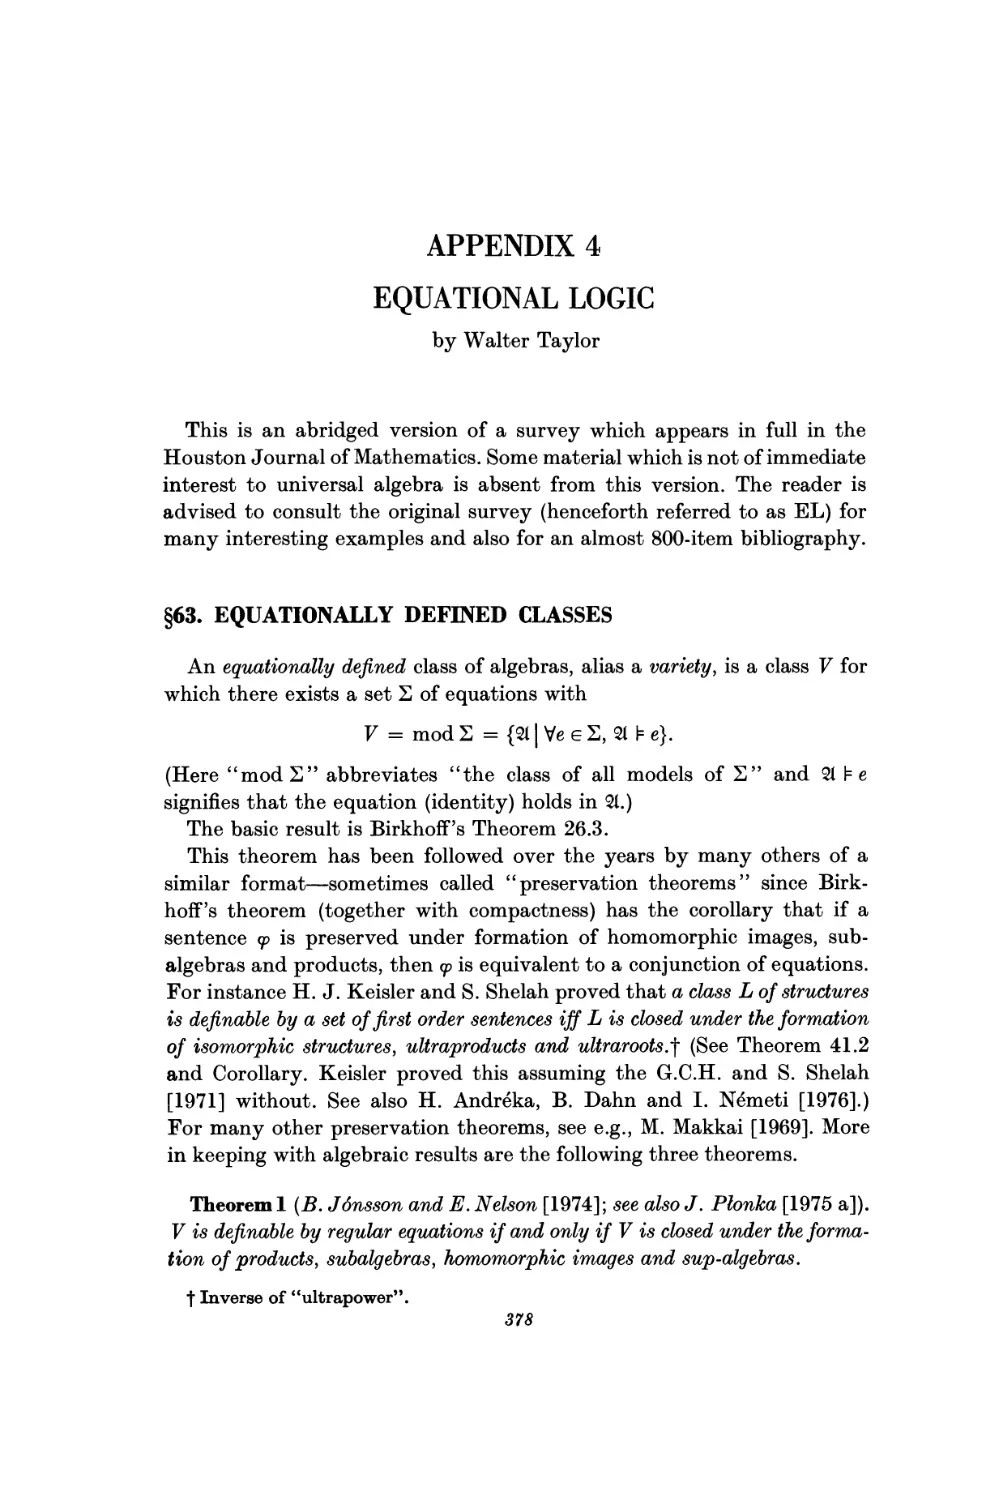 Appendix 4. Equational logic